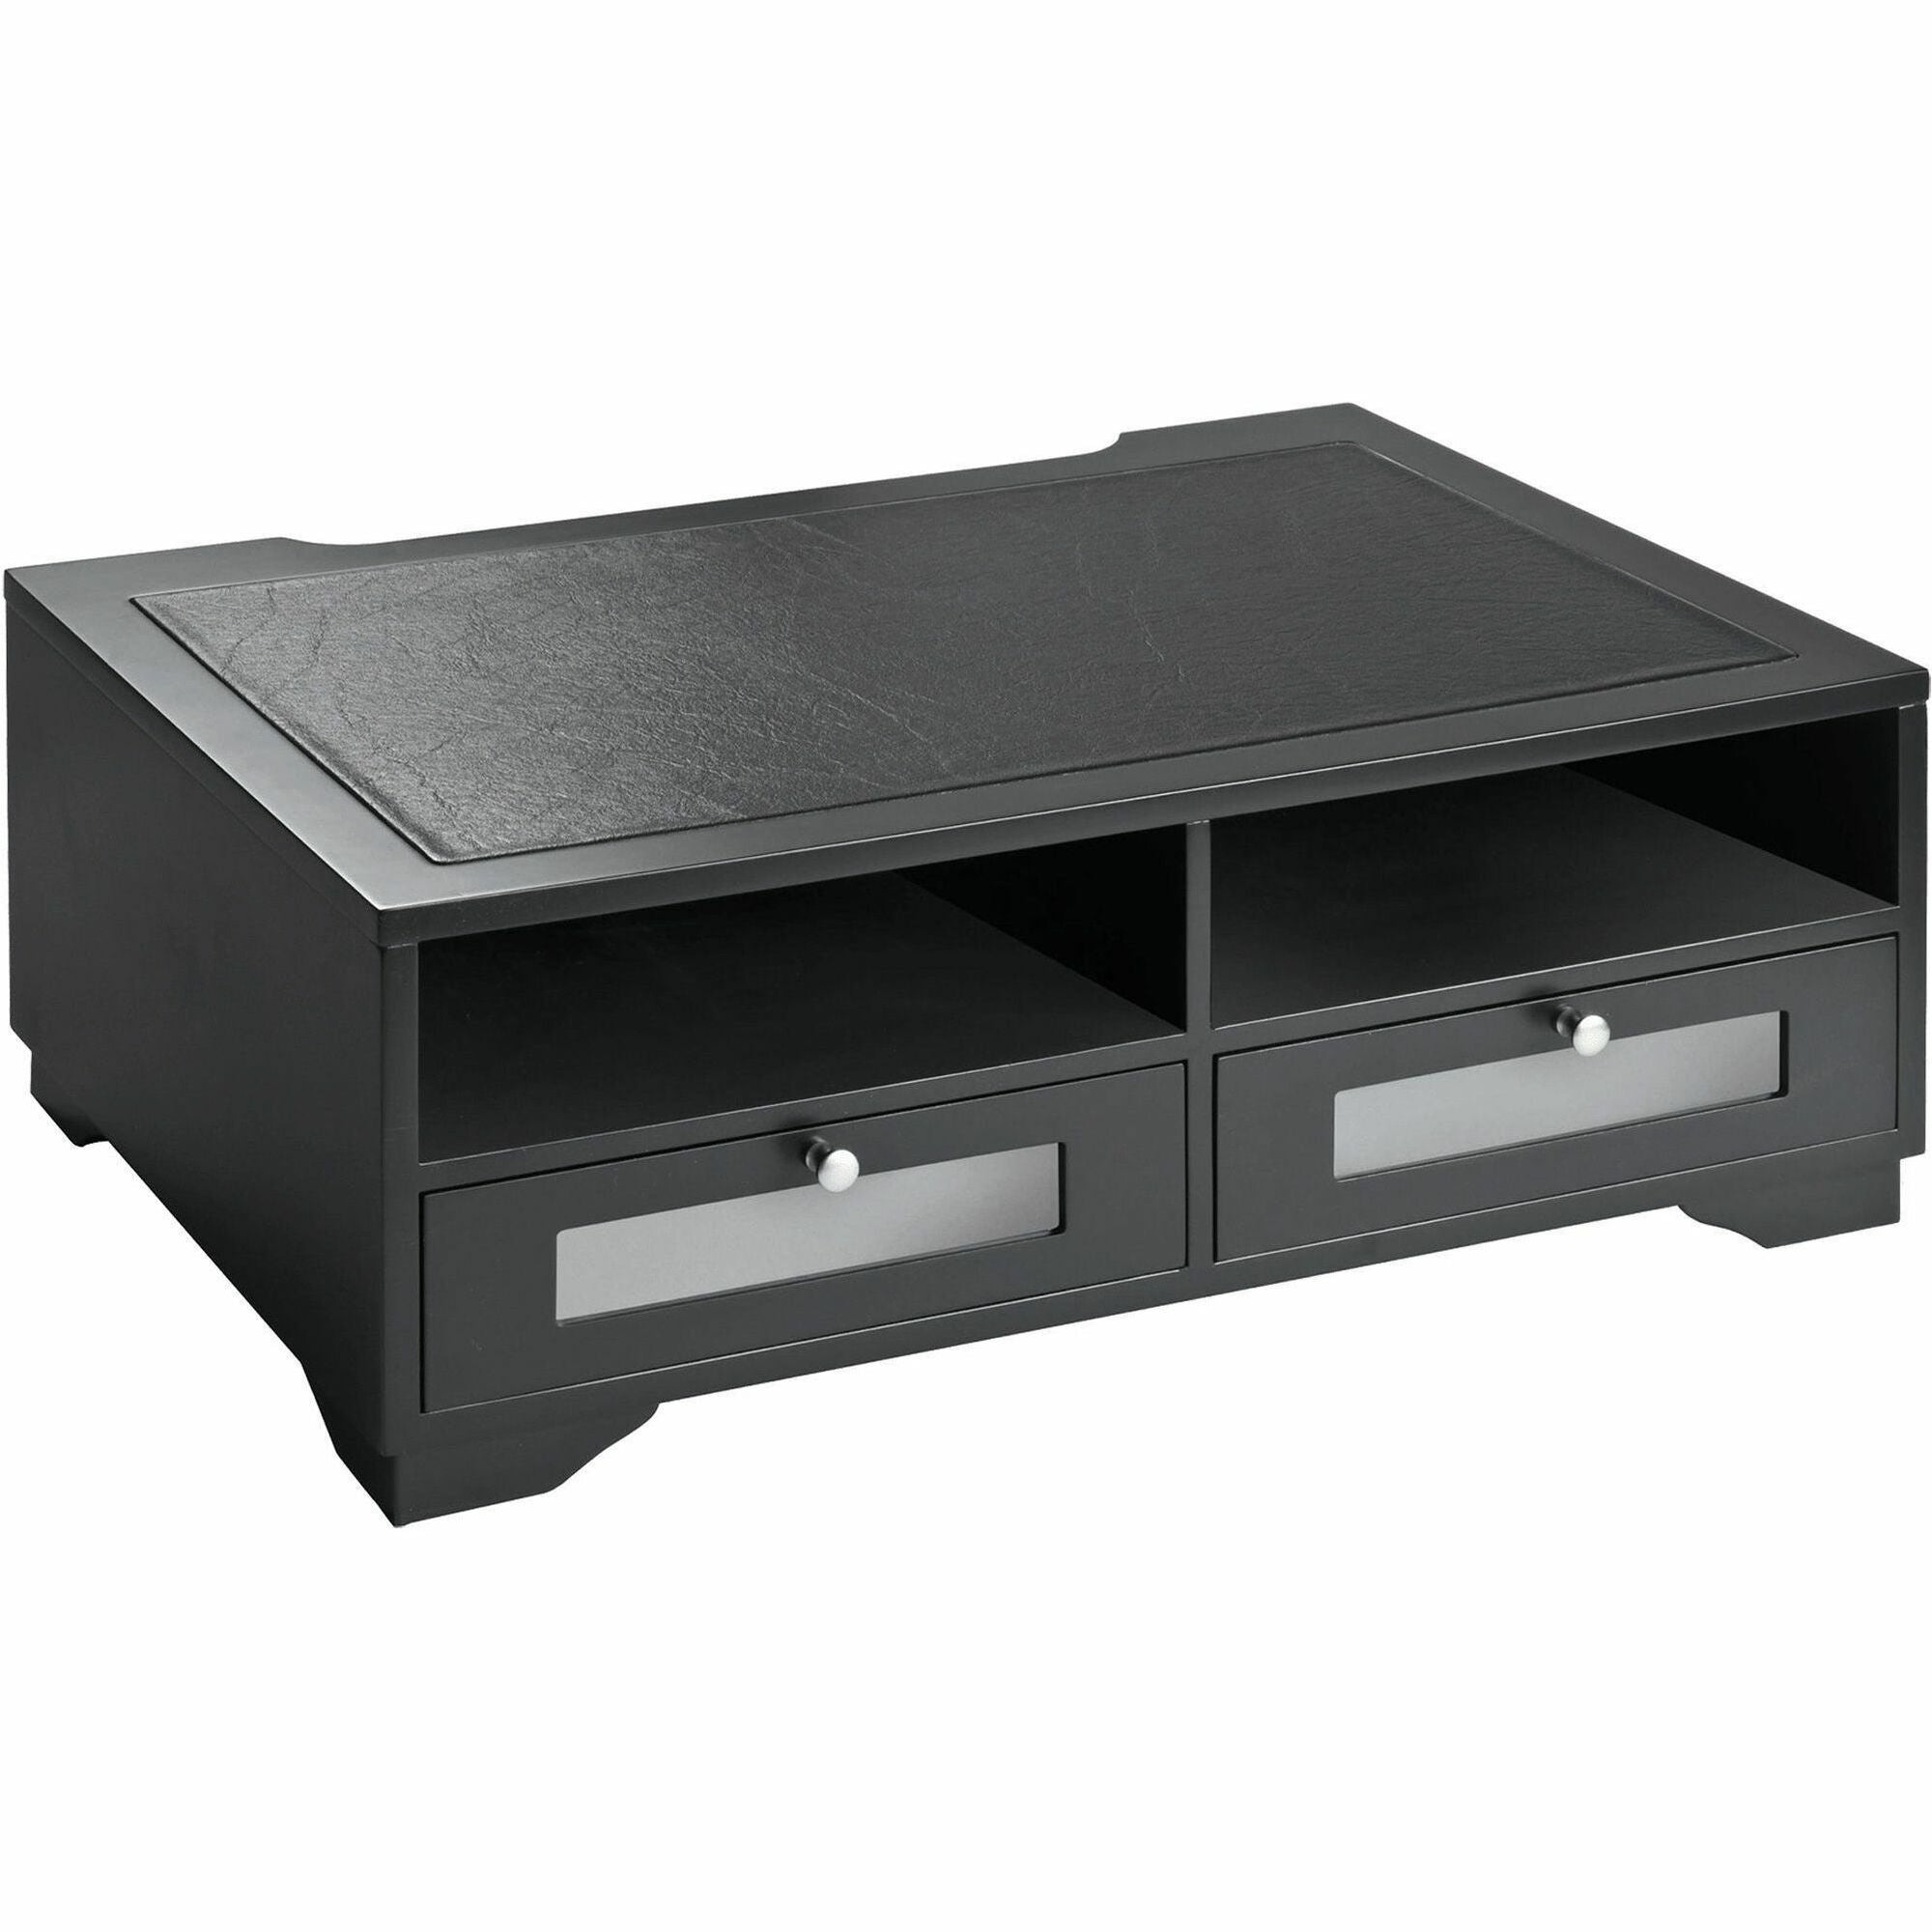 Victor 1130-5 Midnight Black Printer Stand - 2 x Shelf(ves) - 7.8" Height x 21.8" Width x 15.3" Depth - Desktop - Matte - Wood, Glass - Black - 